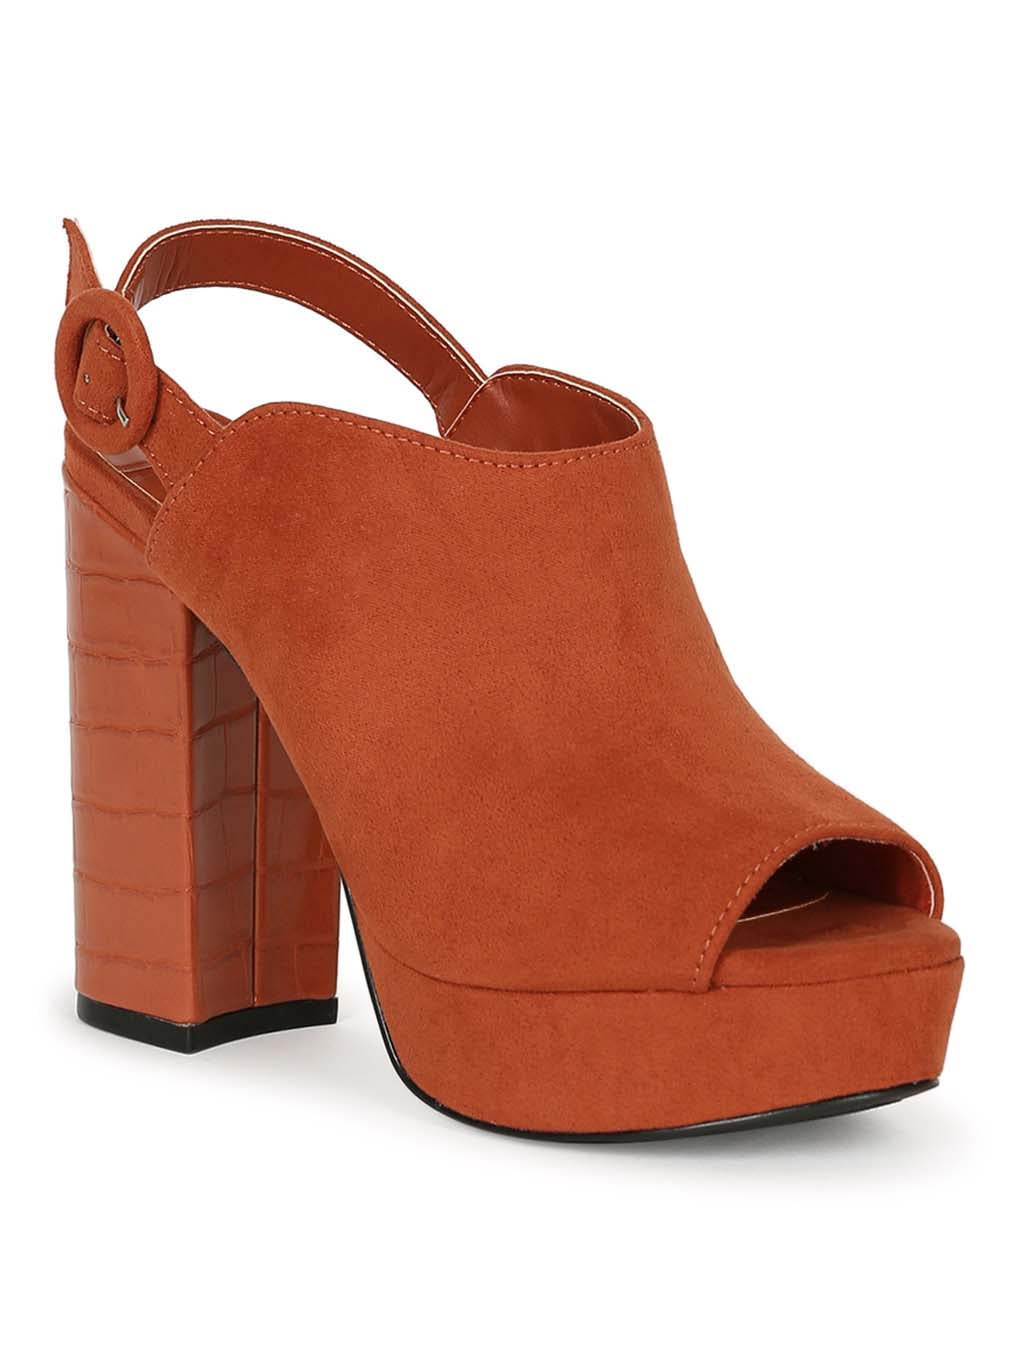 Womens High Block Heel Mules Open Toe Slingback Sandals Platform New Fashion US 